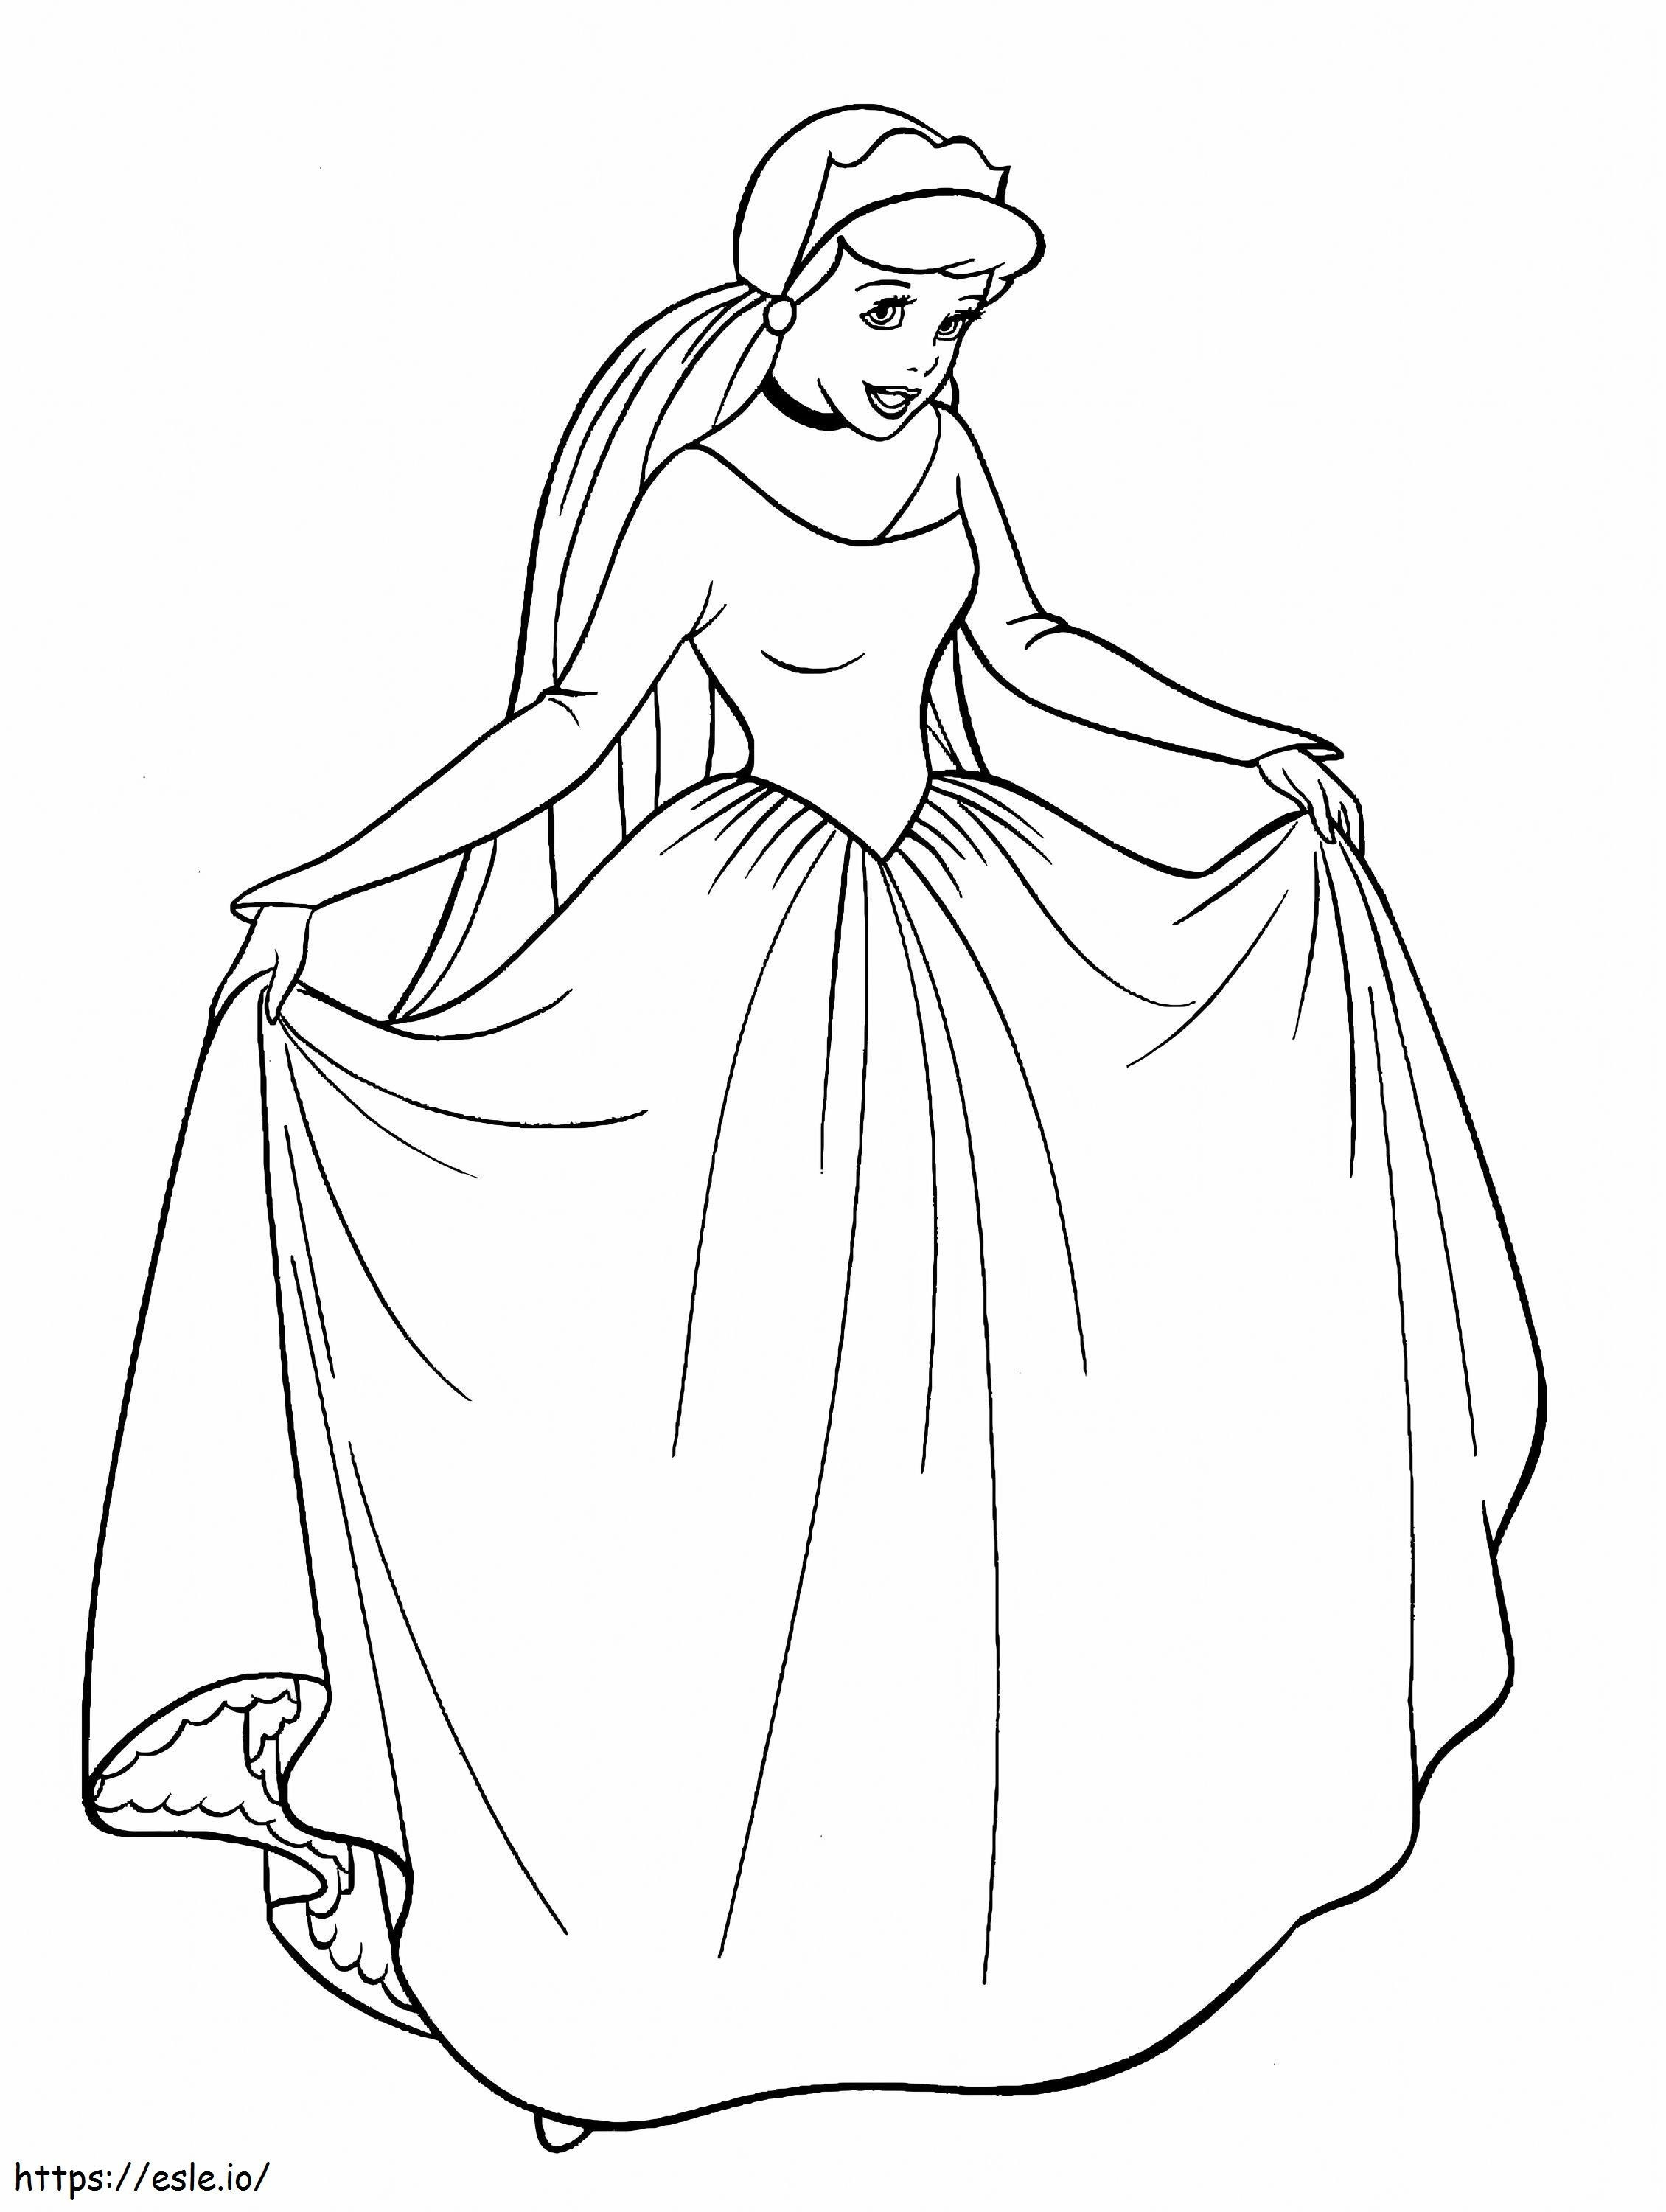 Basic Cinderella coloring page